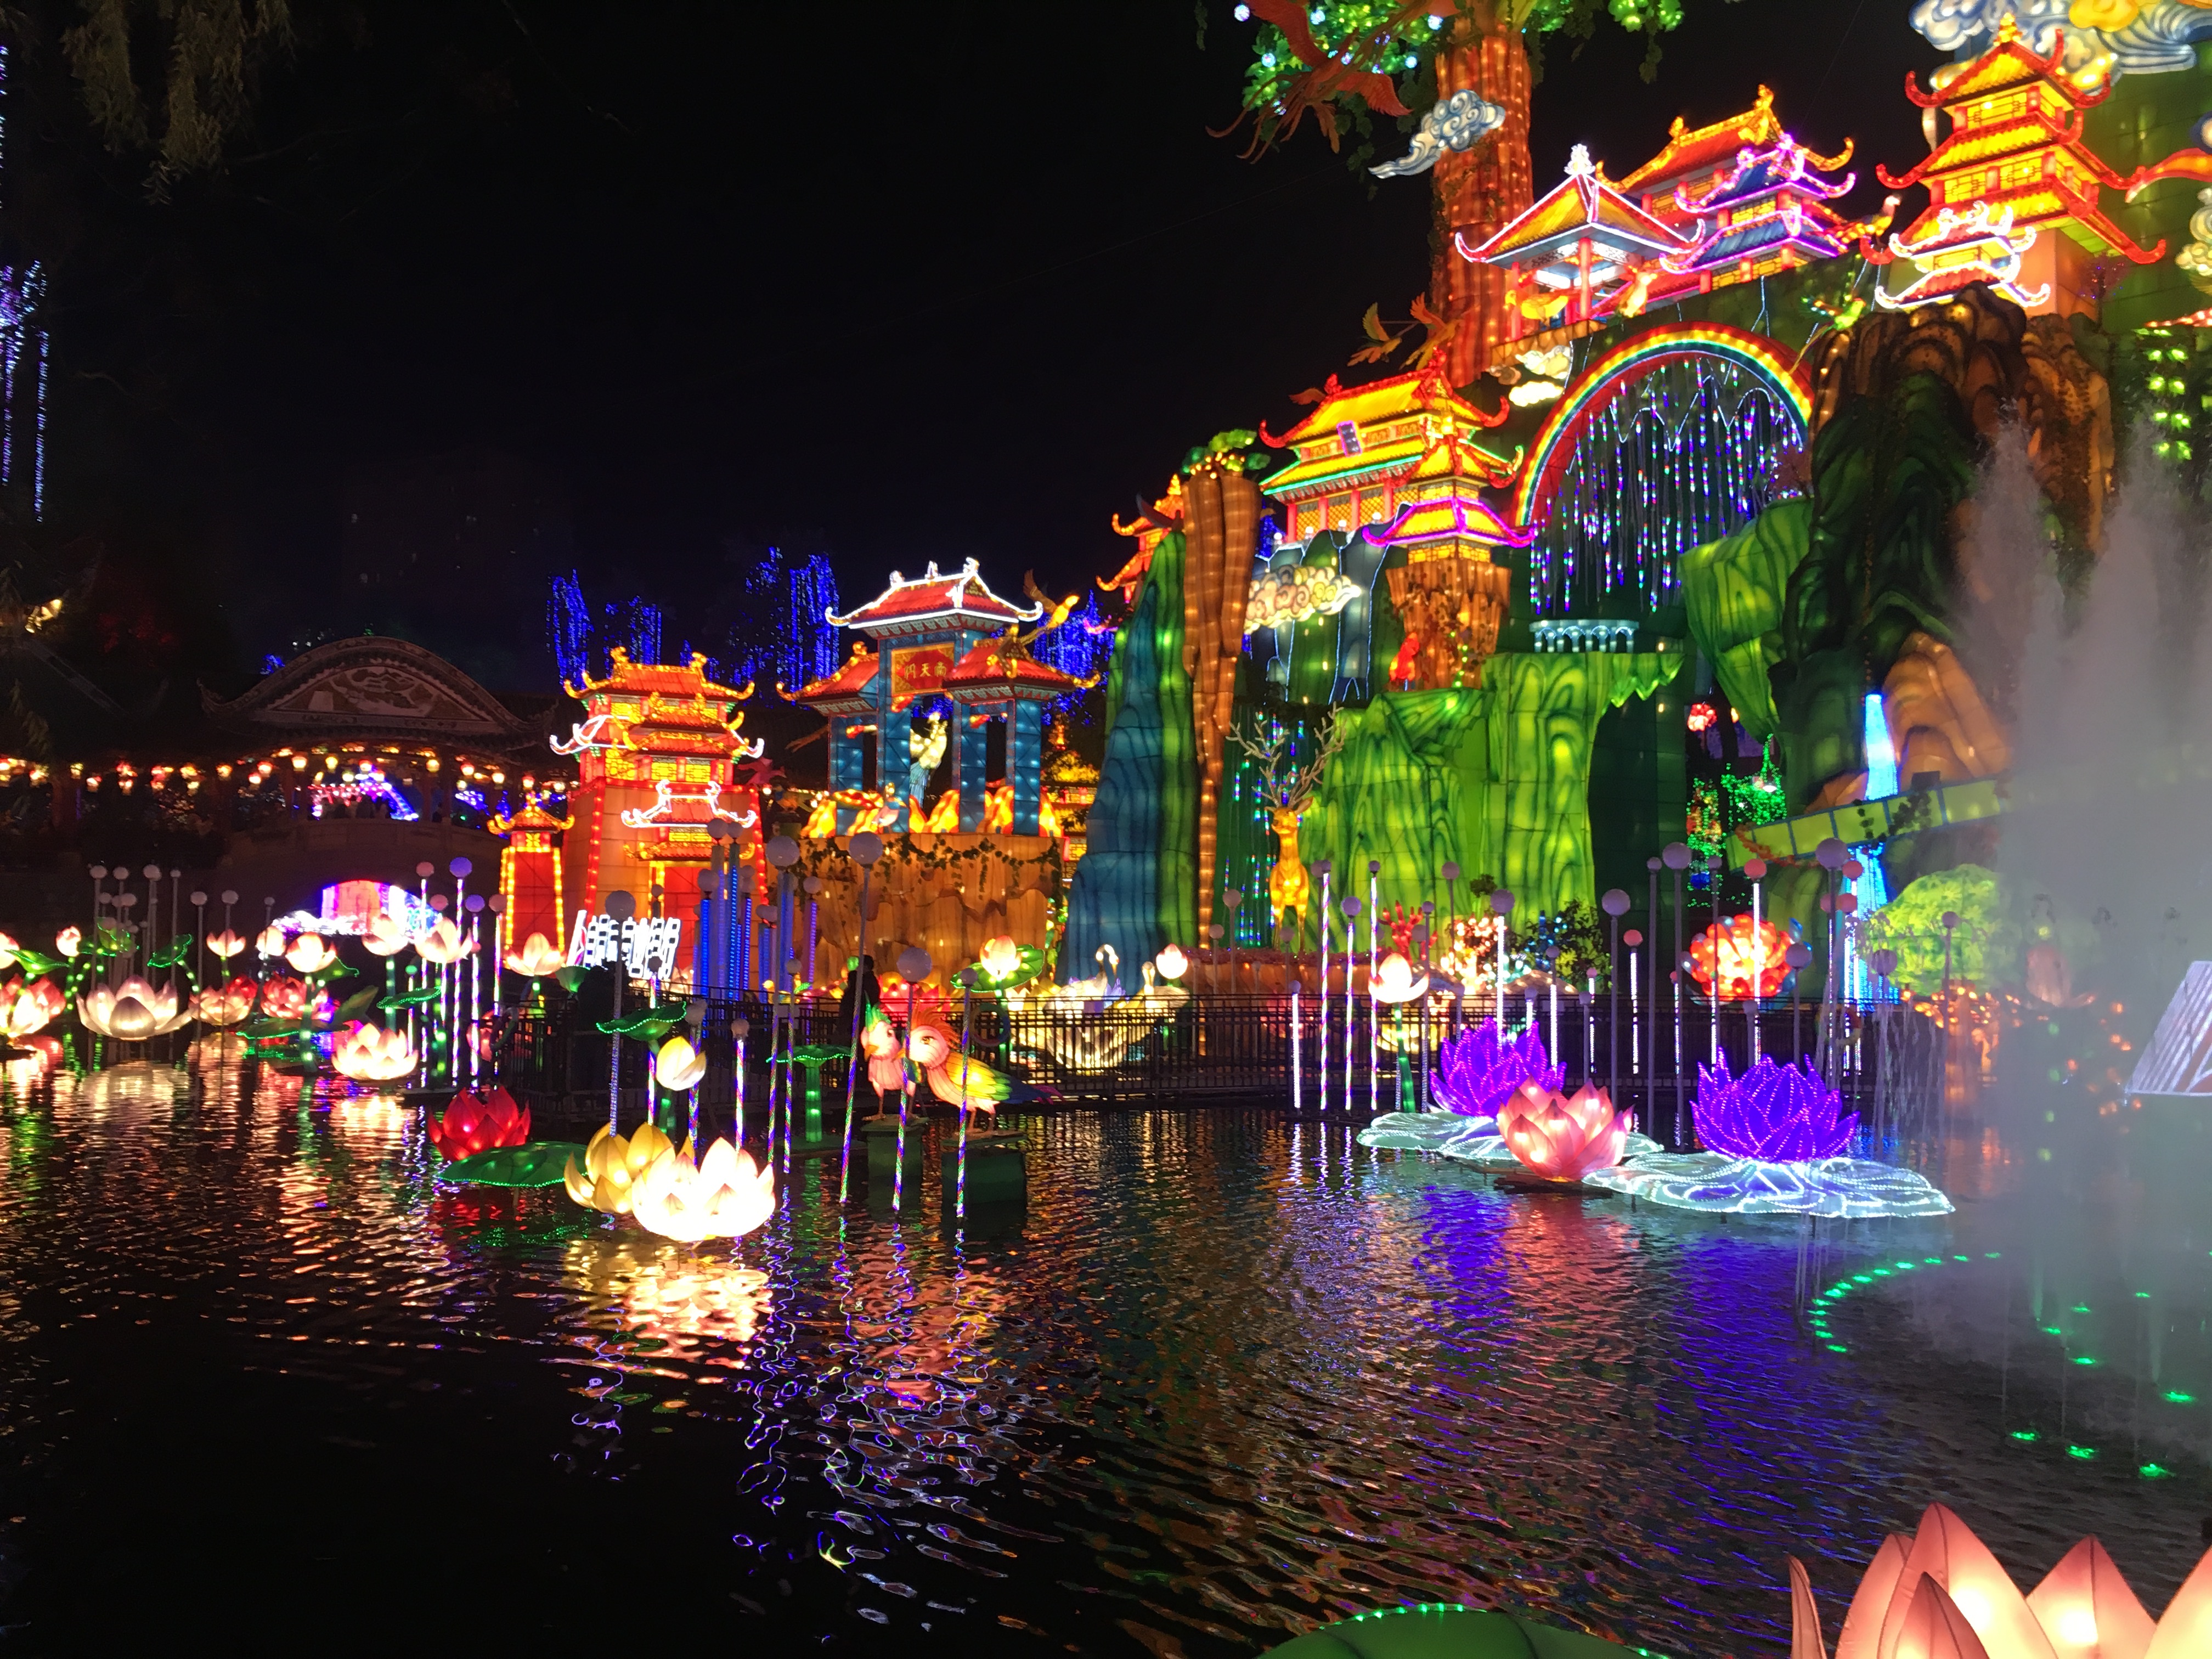 The twentythird zigong international lantern festival photo China